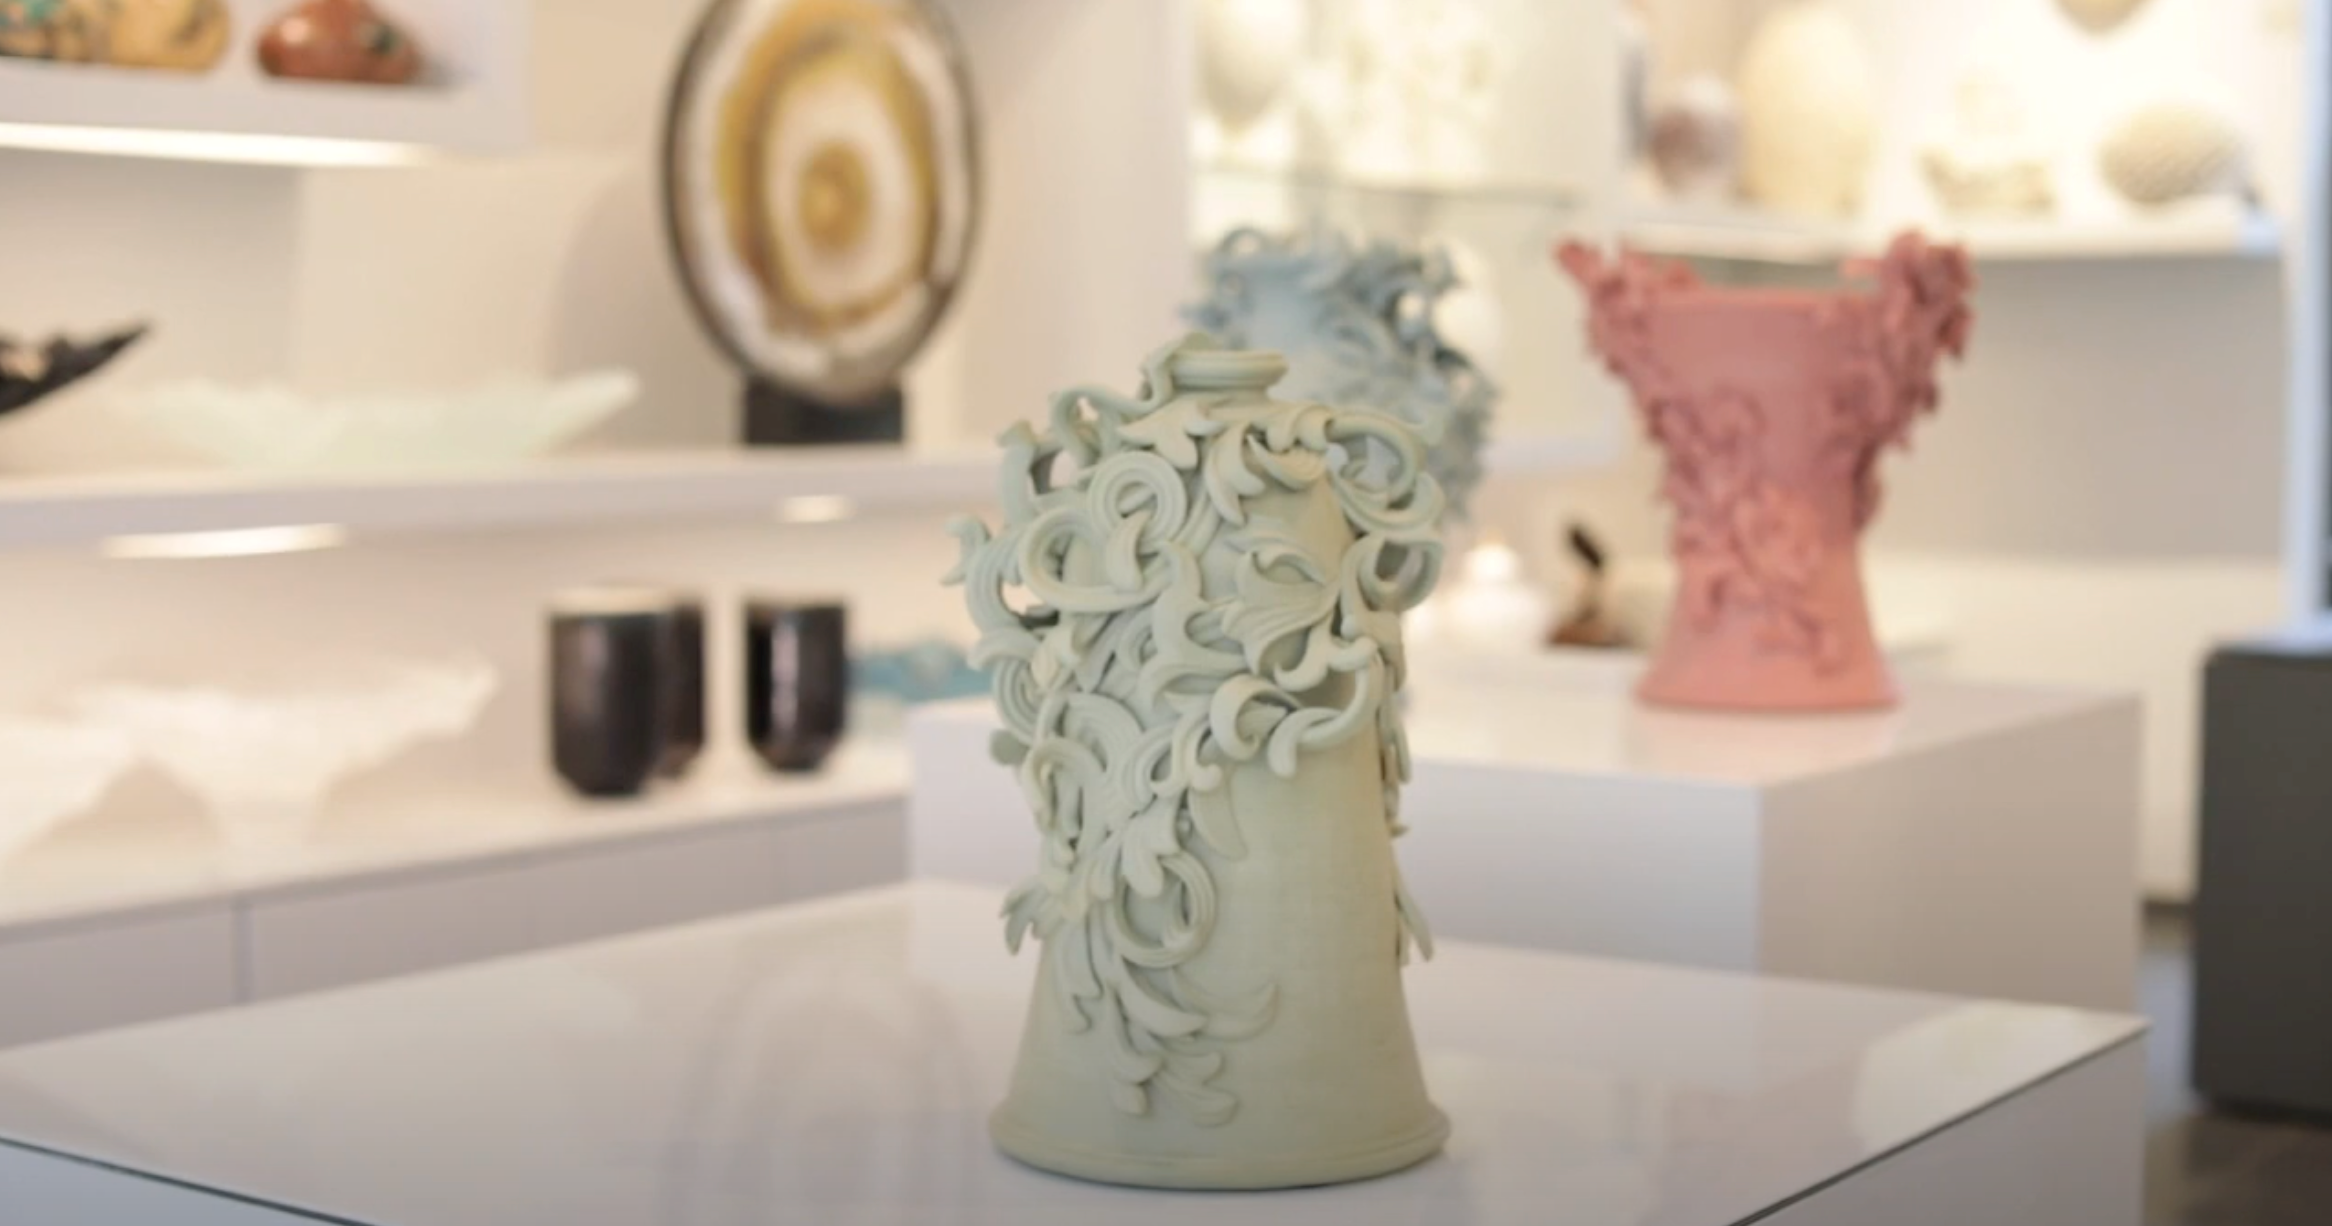 ceramic clay vase sculpture handmade by jo taylor 